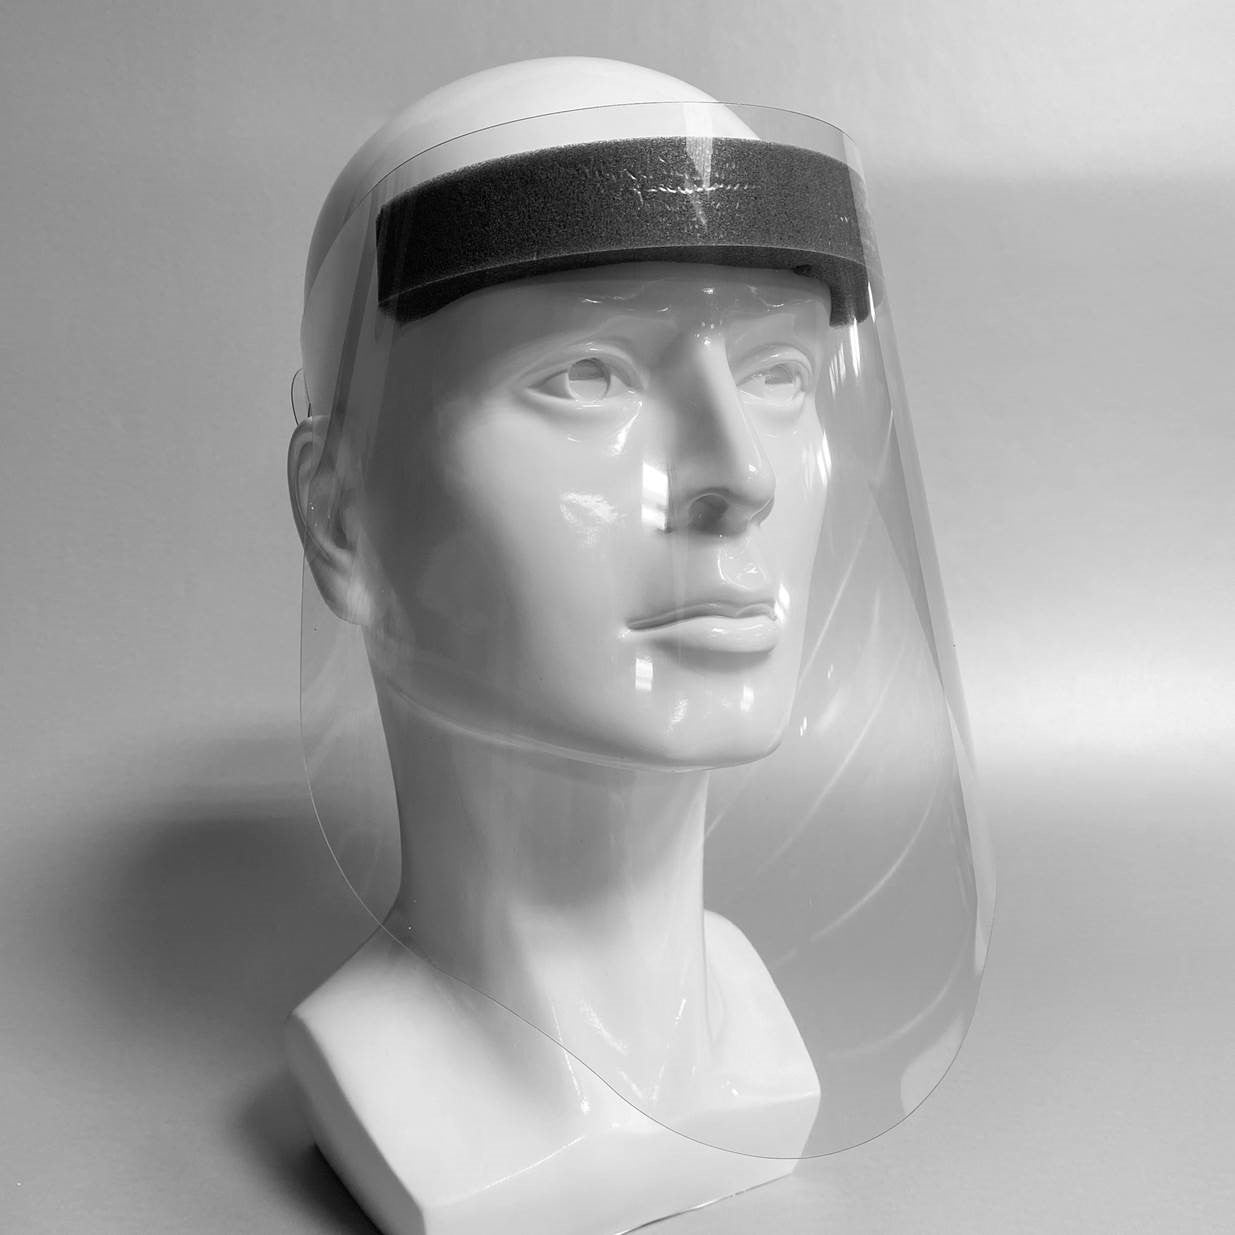 USA Made Adjustable Protective Face Shield (25 pcs)